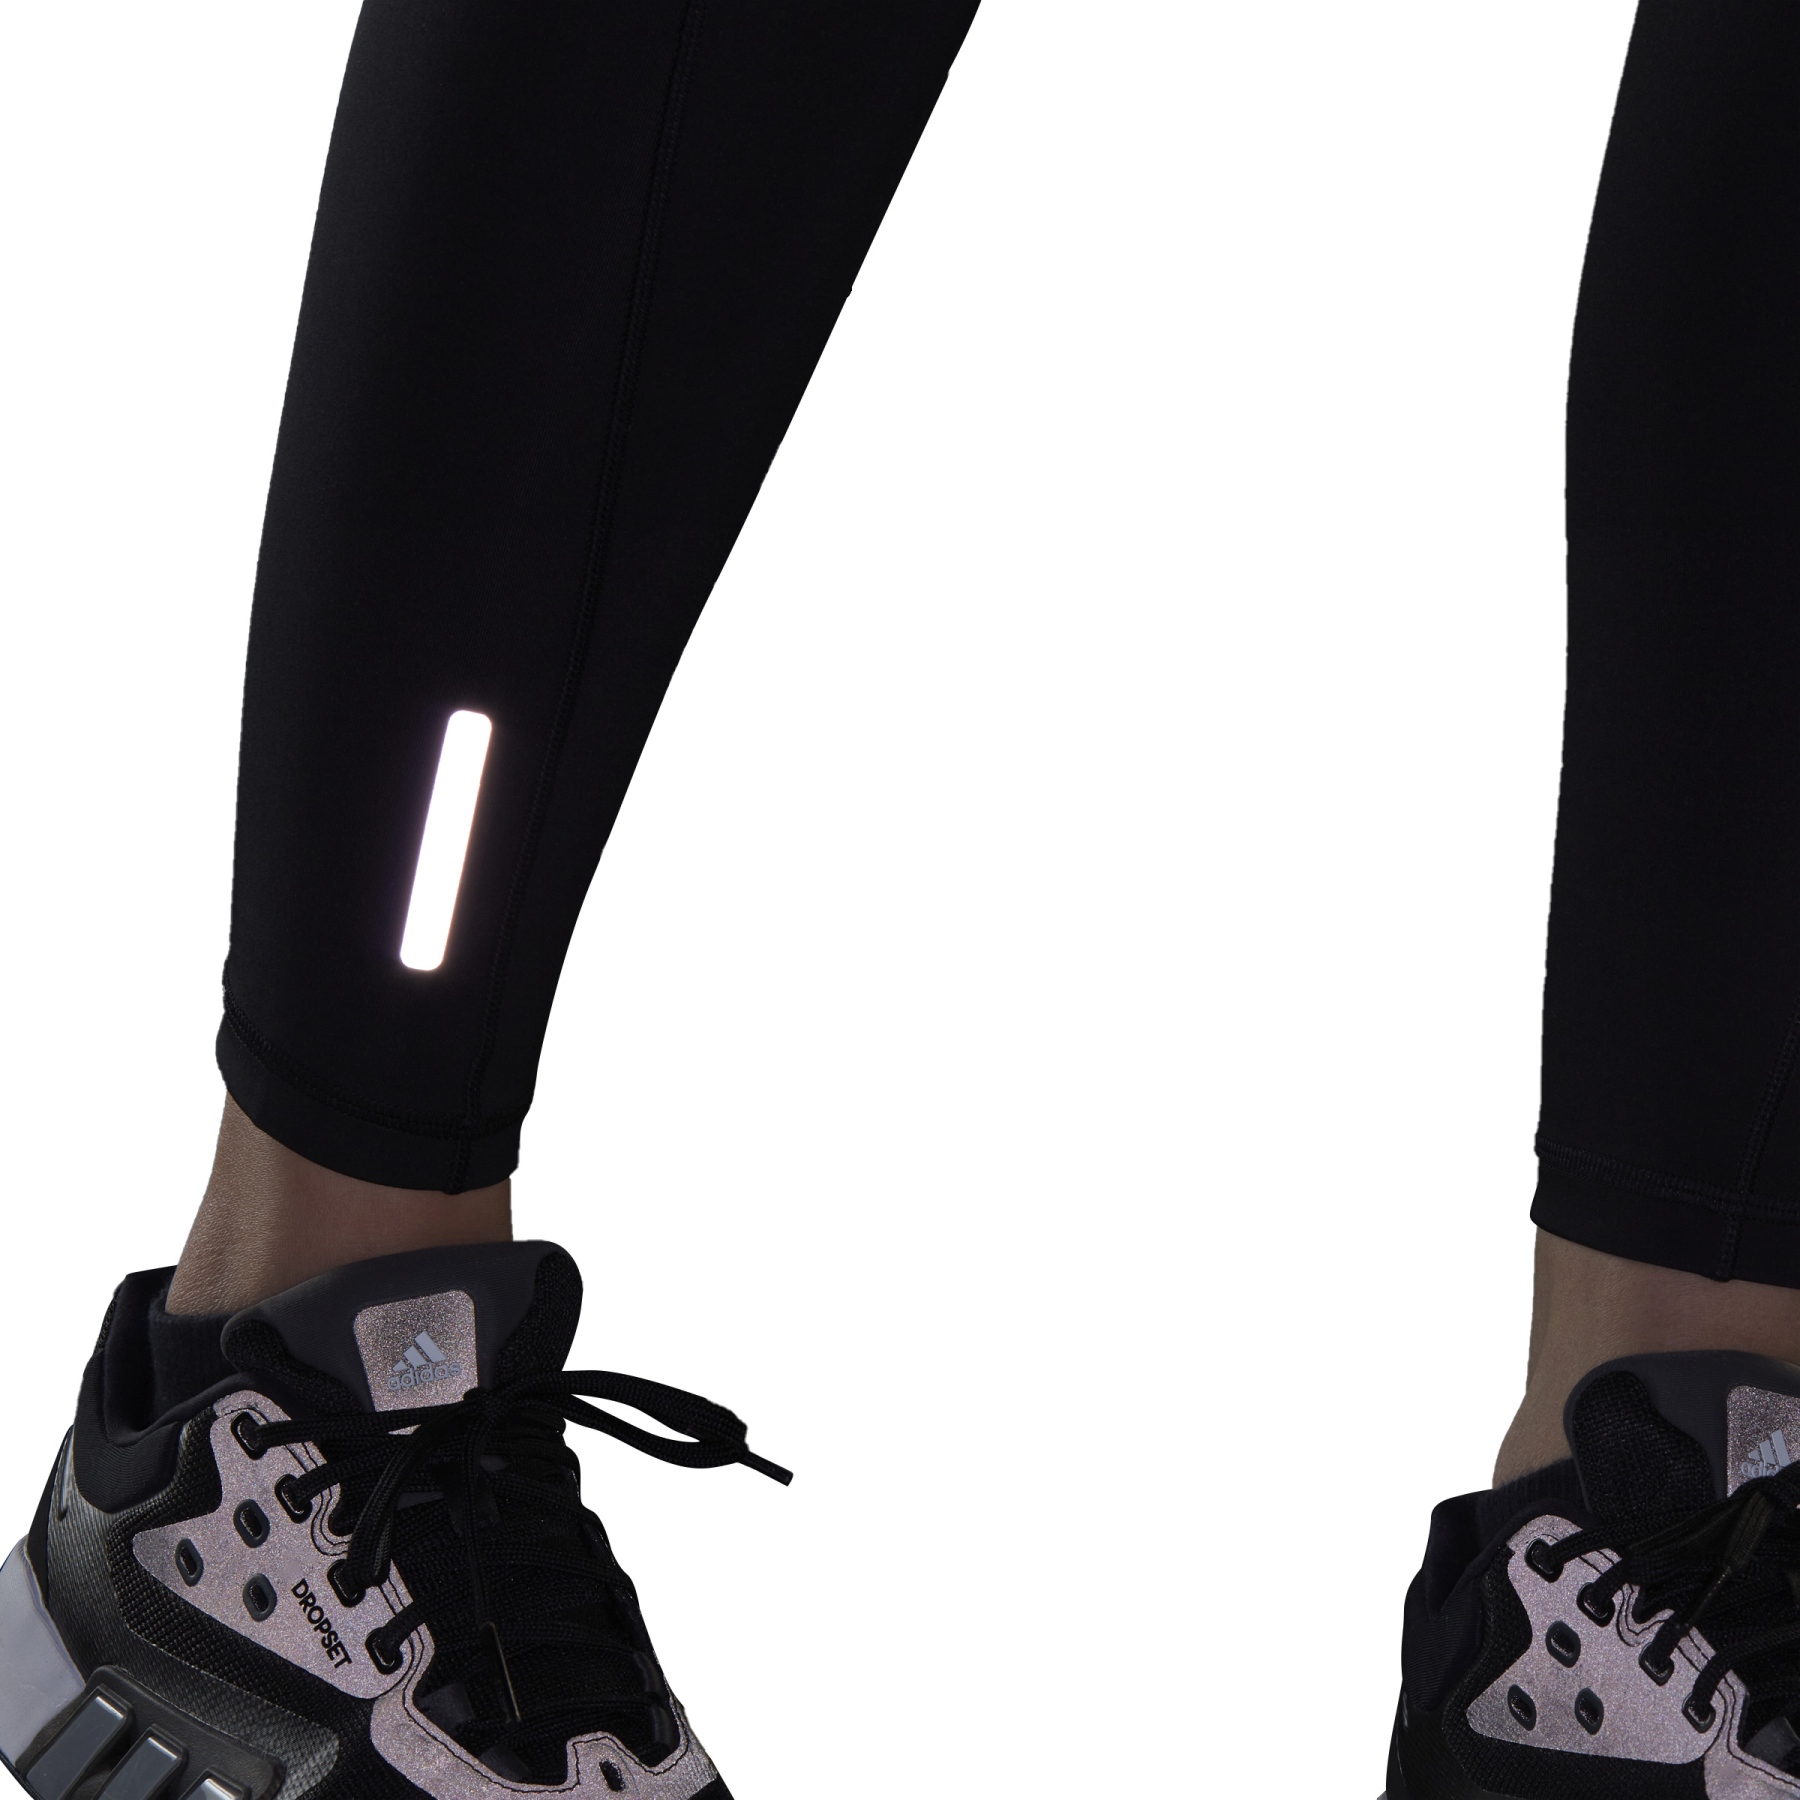 adidas Legging Homme - Ultimate COLD.RDY - noir IB6386 - BIKE24